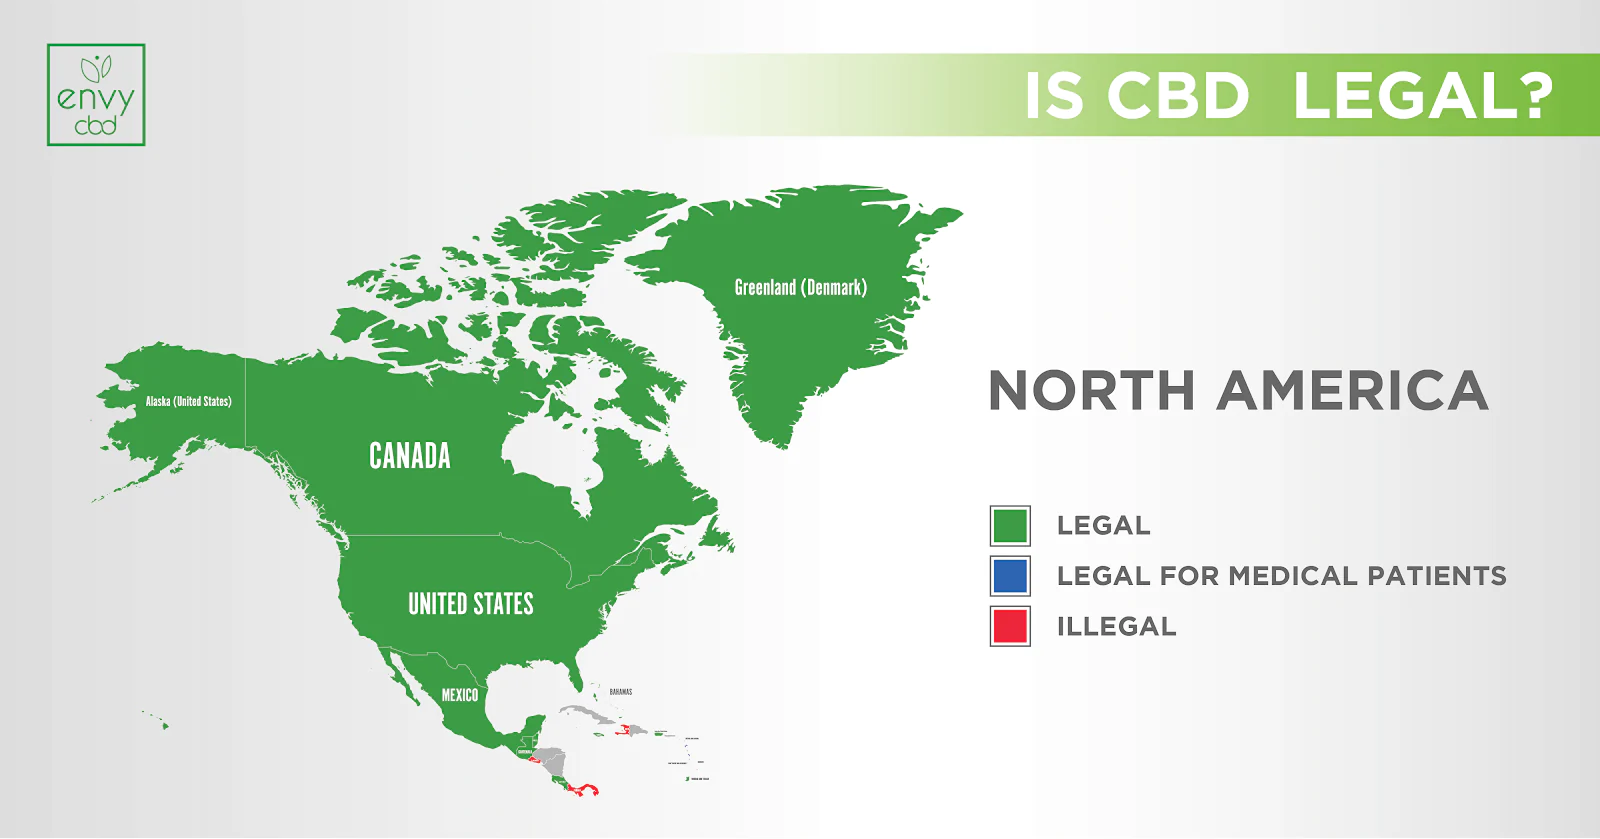 The Legal Status of CBD in North America